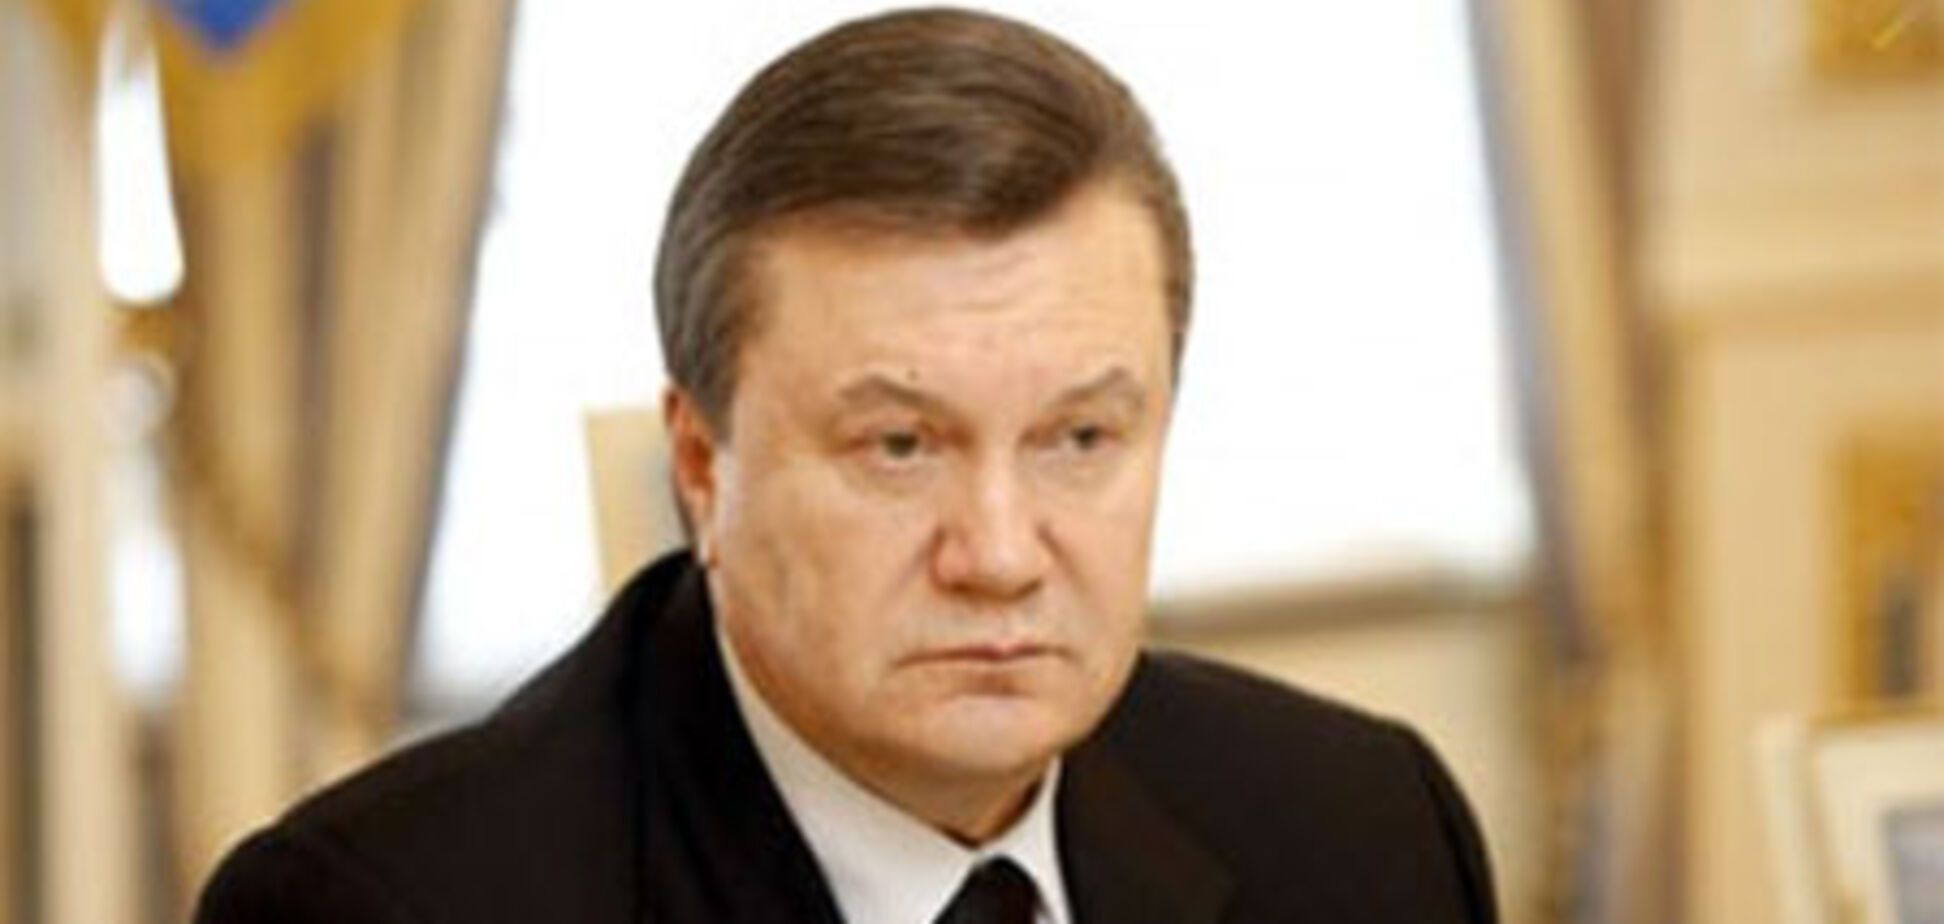 ПР: Истерики Тимошенко на Януковича не повлияют